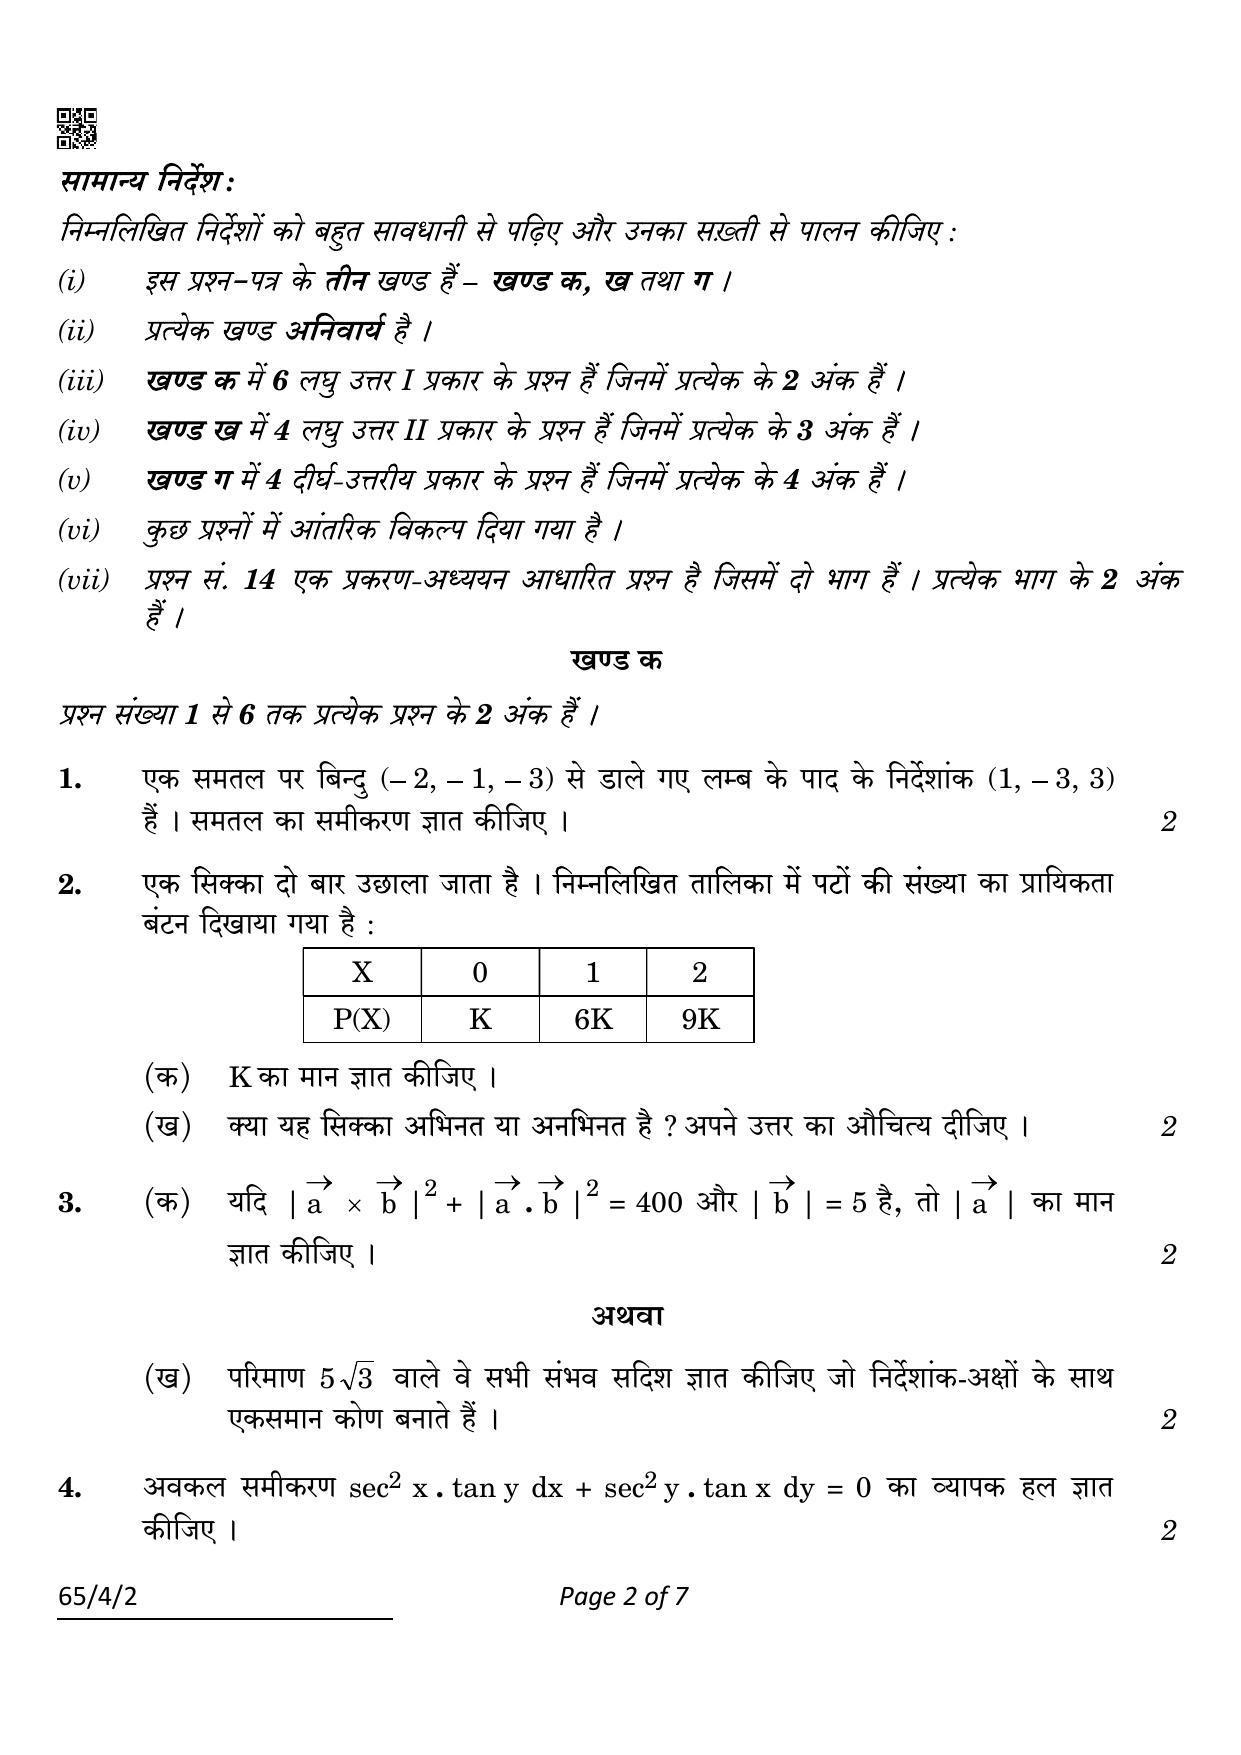 CBSE Class 12 65-4-2 Mathematics 2022 Question Paper - Page 2